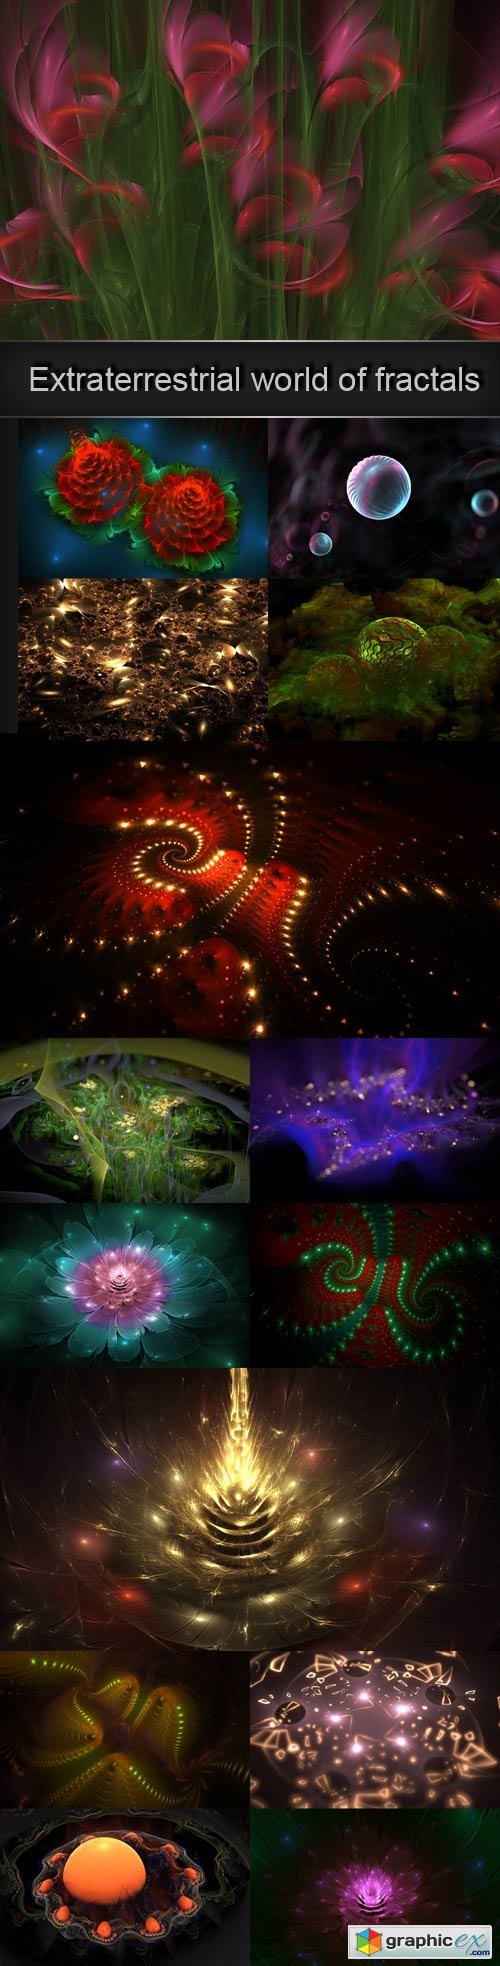 Extraterrestrial world of fractals